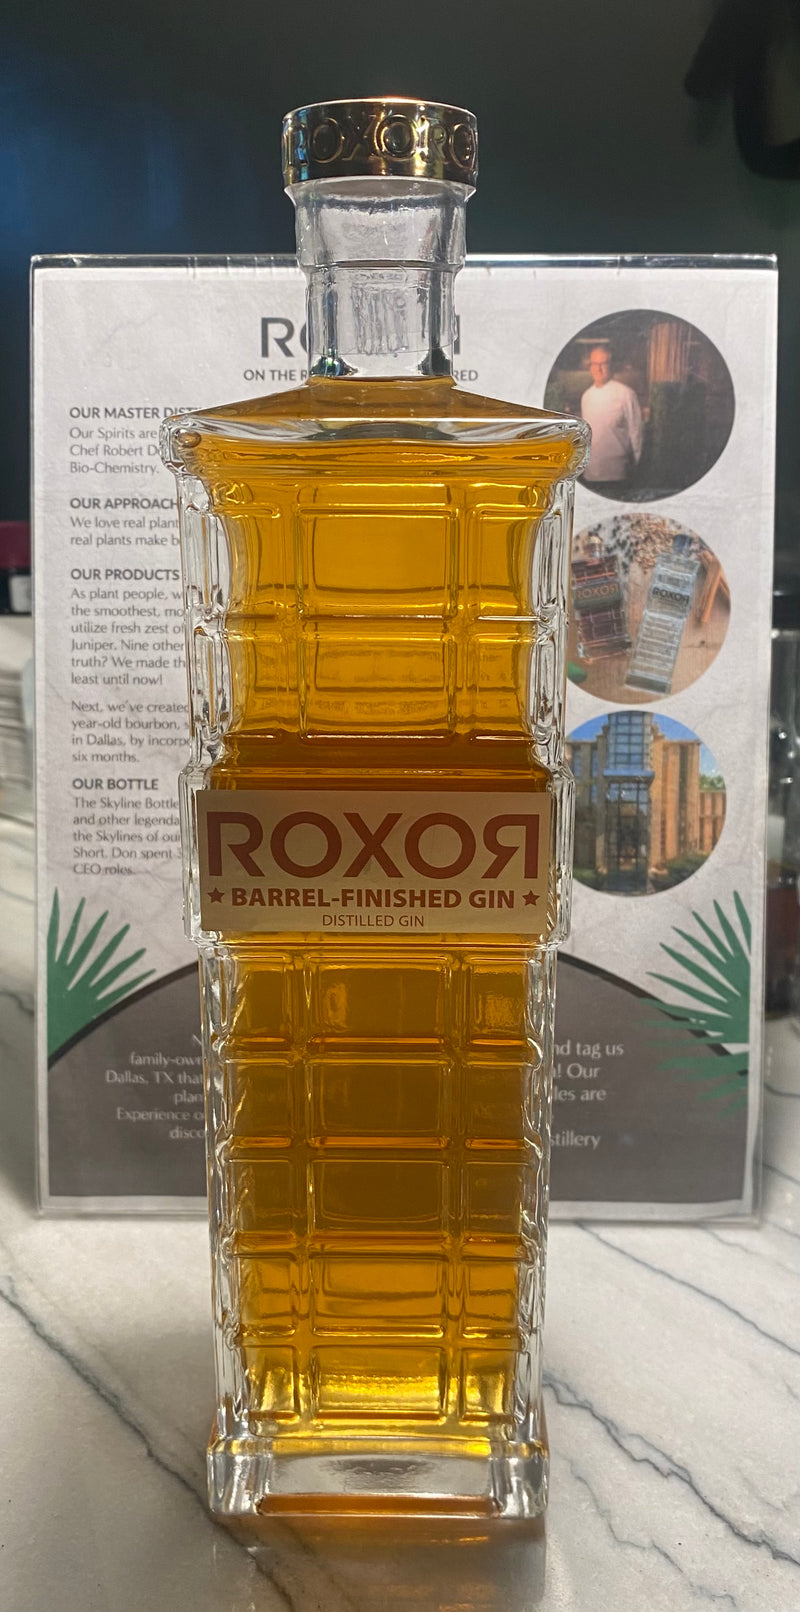 ROXOR Barrel-finished Gin